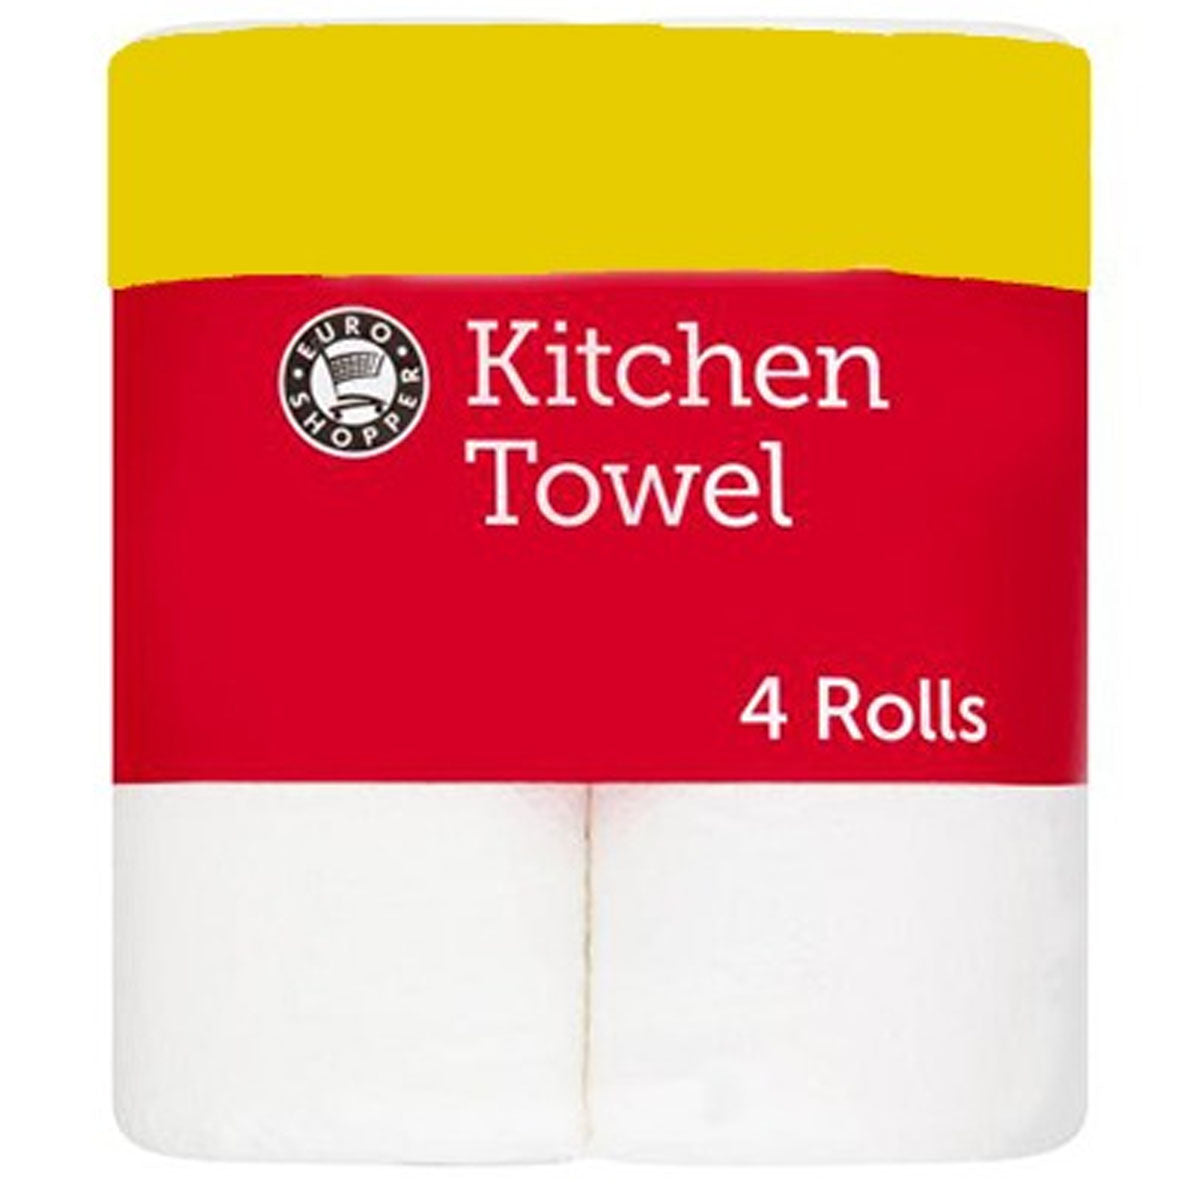 Euro Shopper - Kitchen Towels - 4 Rolls - Continental Food Store